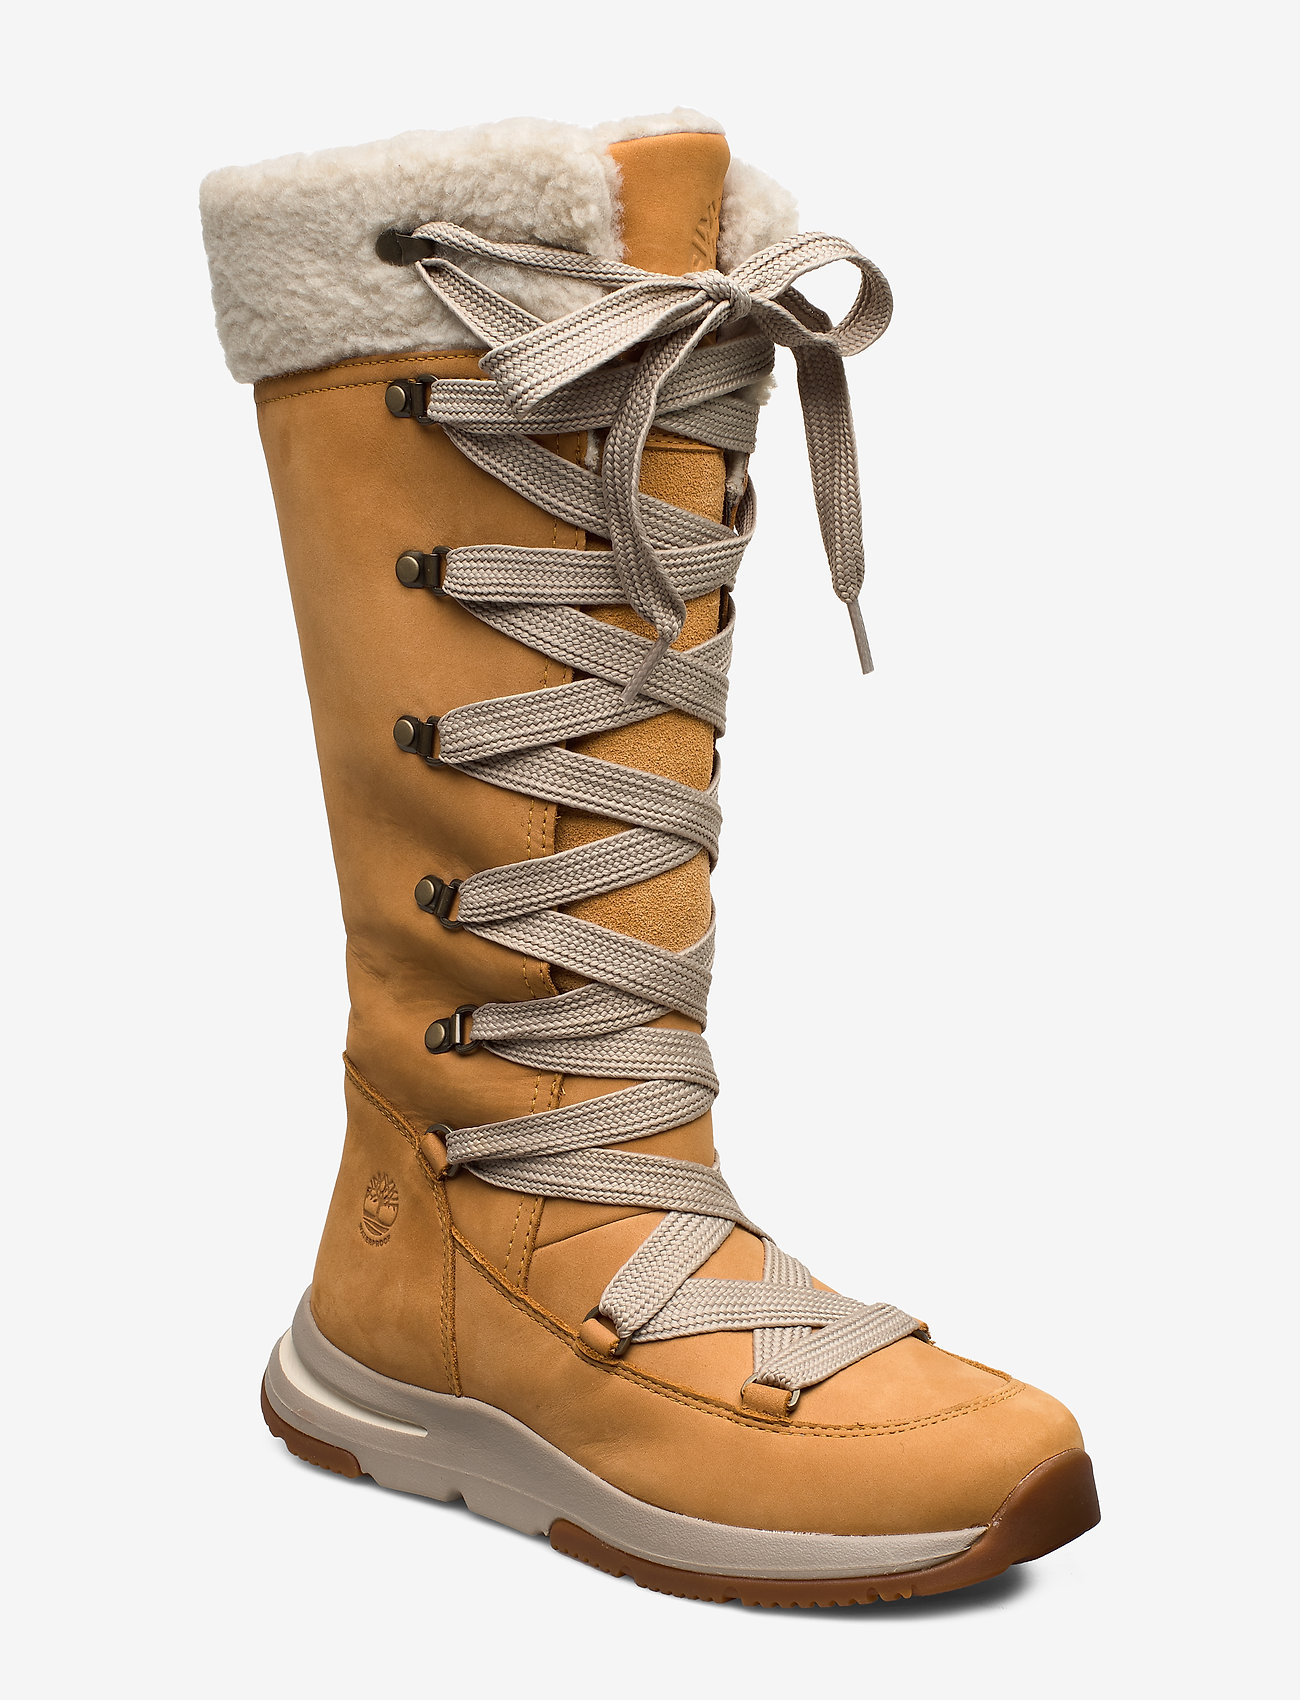 timberland mukluk tall winter boots